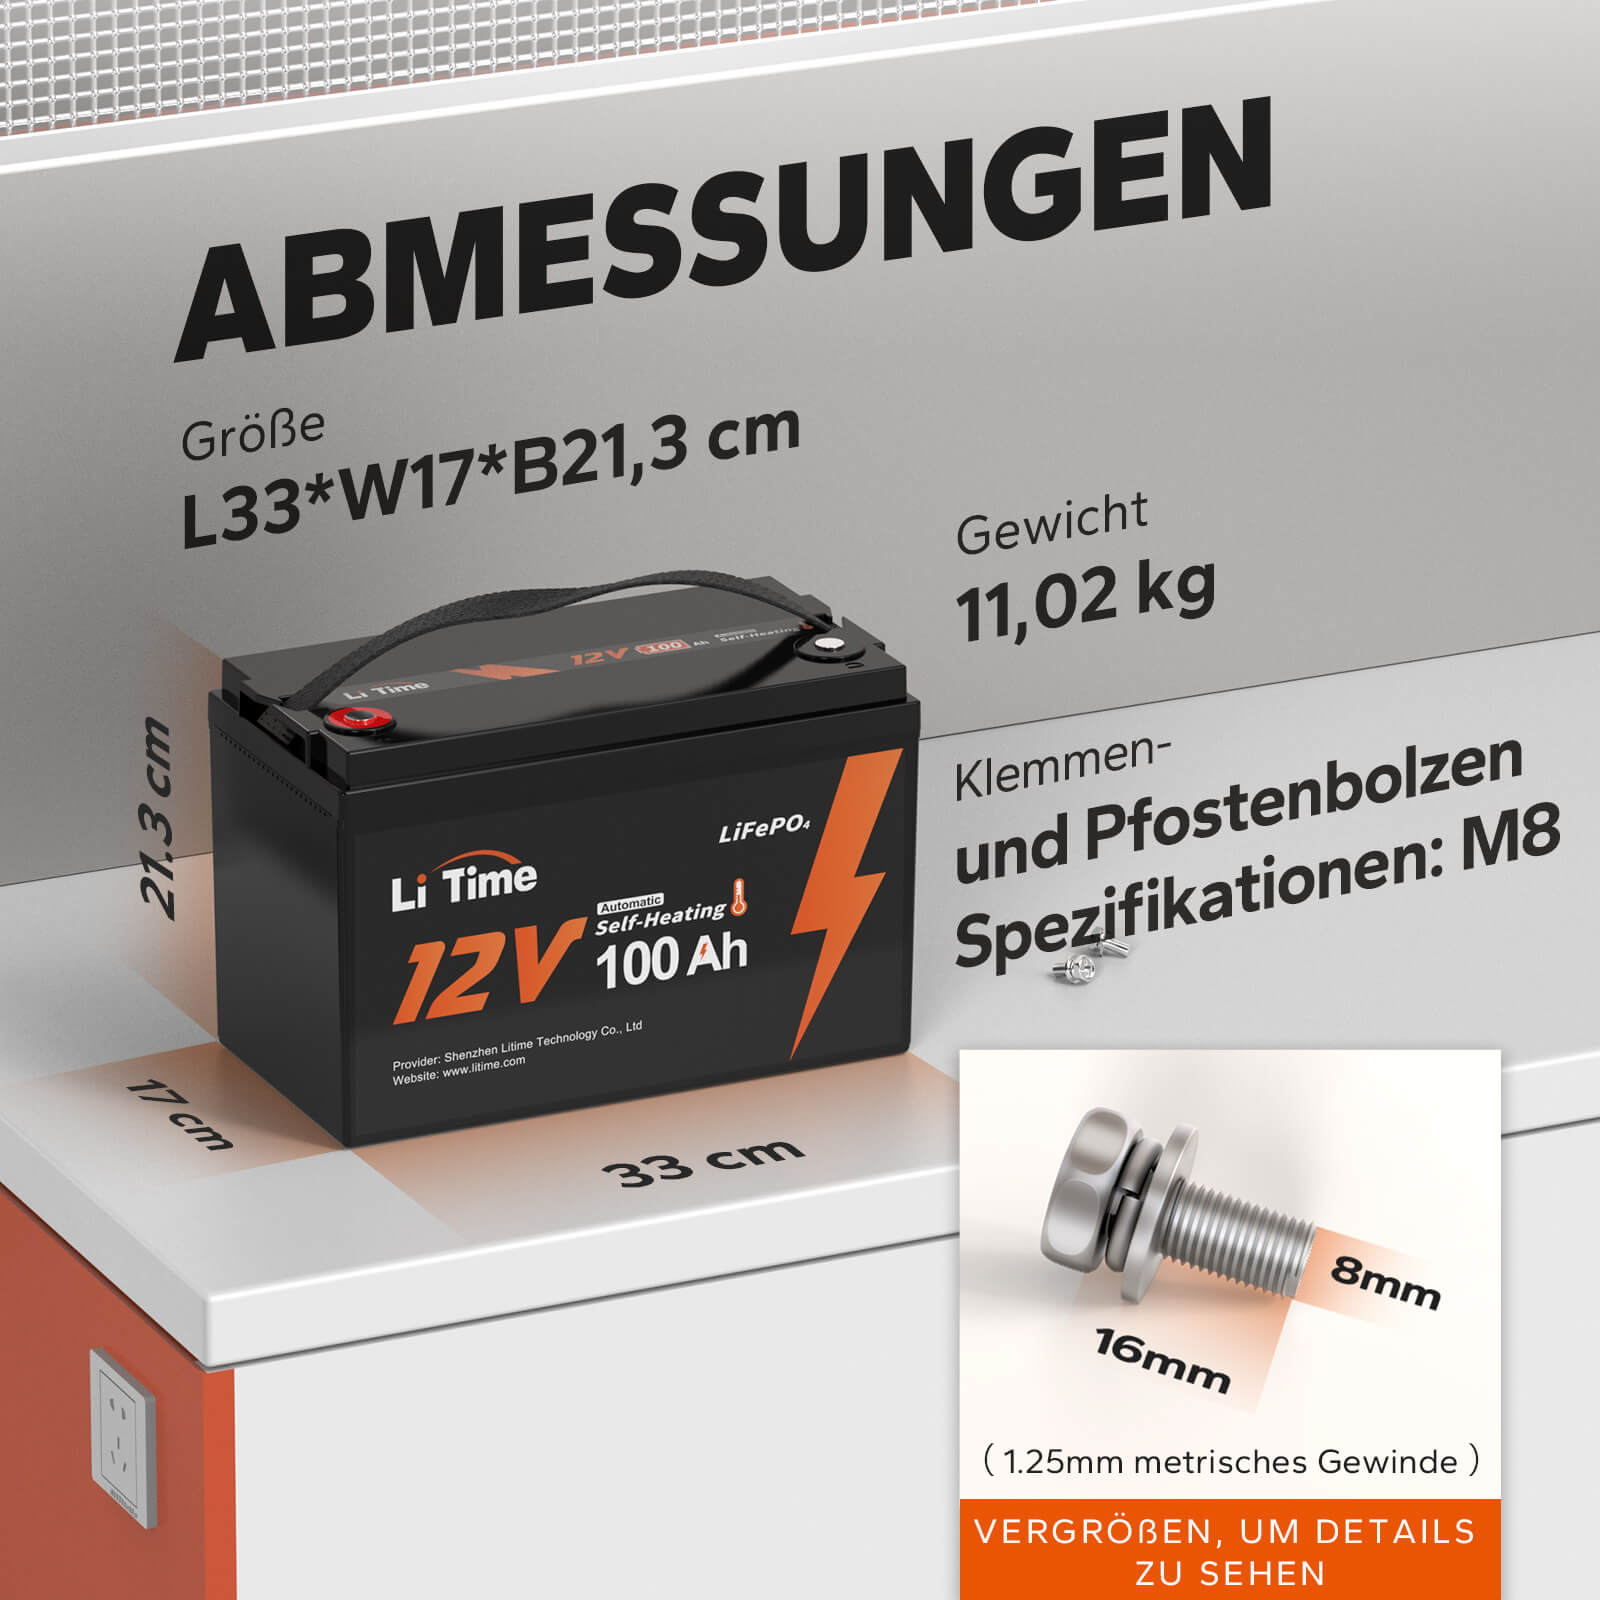 【0% MwSt.】LiTime 12V 100Ah Selbstwärmende LiFePO4 Batterie mit 100A BMS, Tieftemperaturschutz